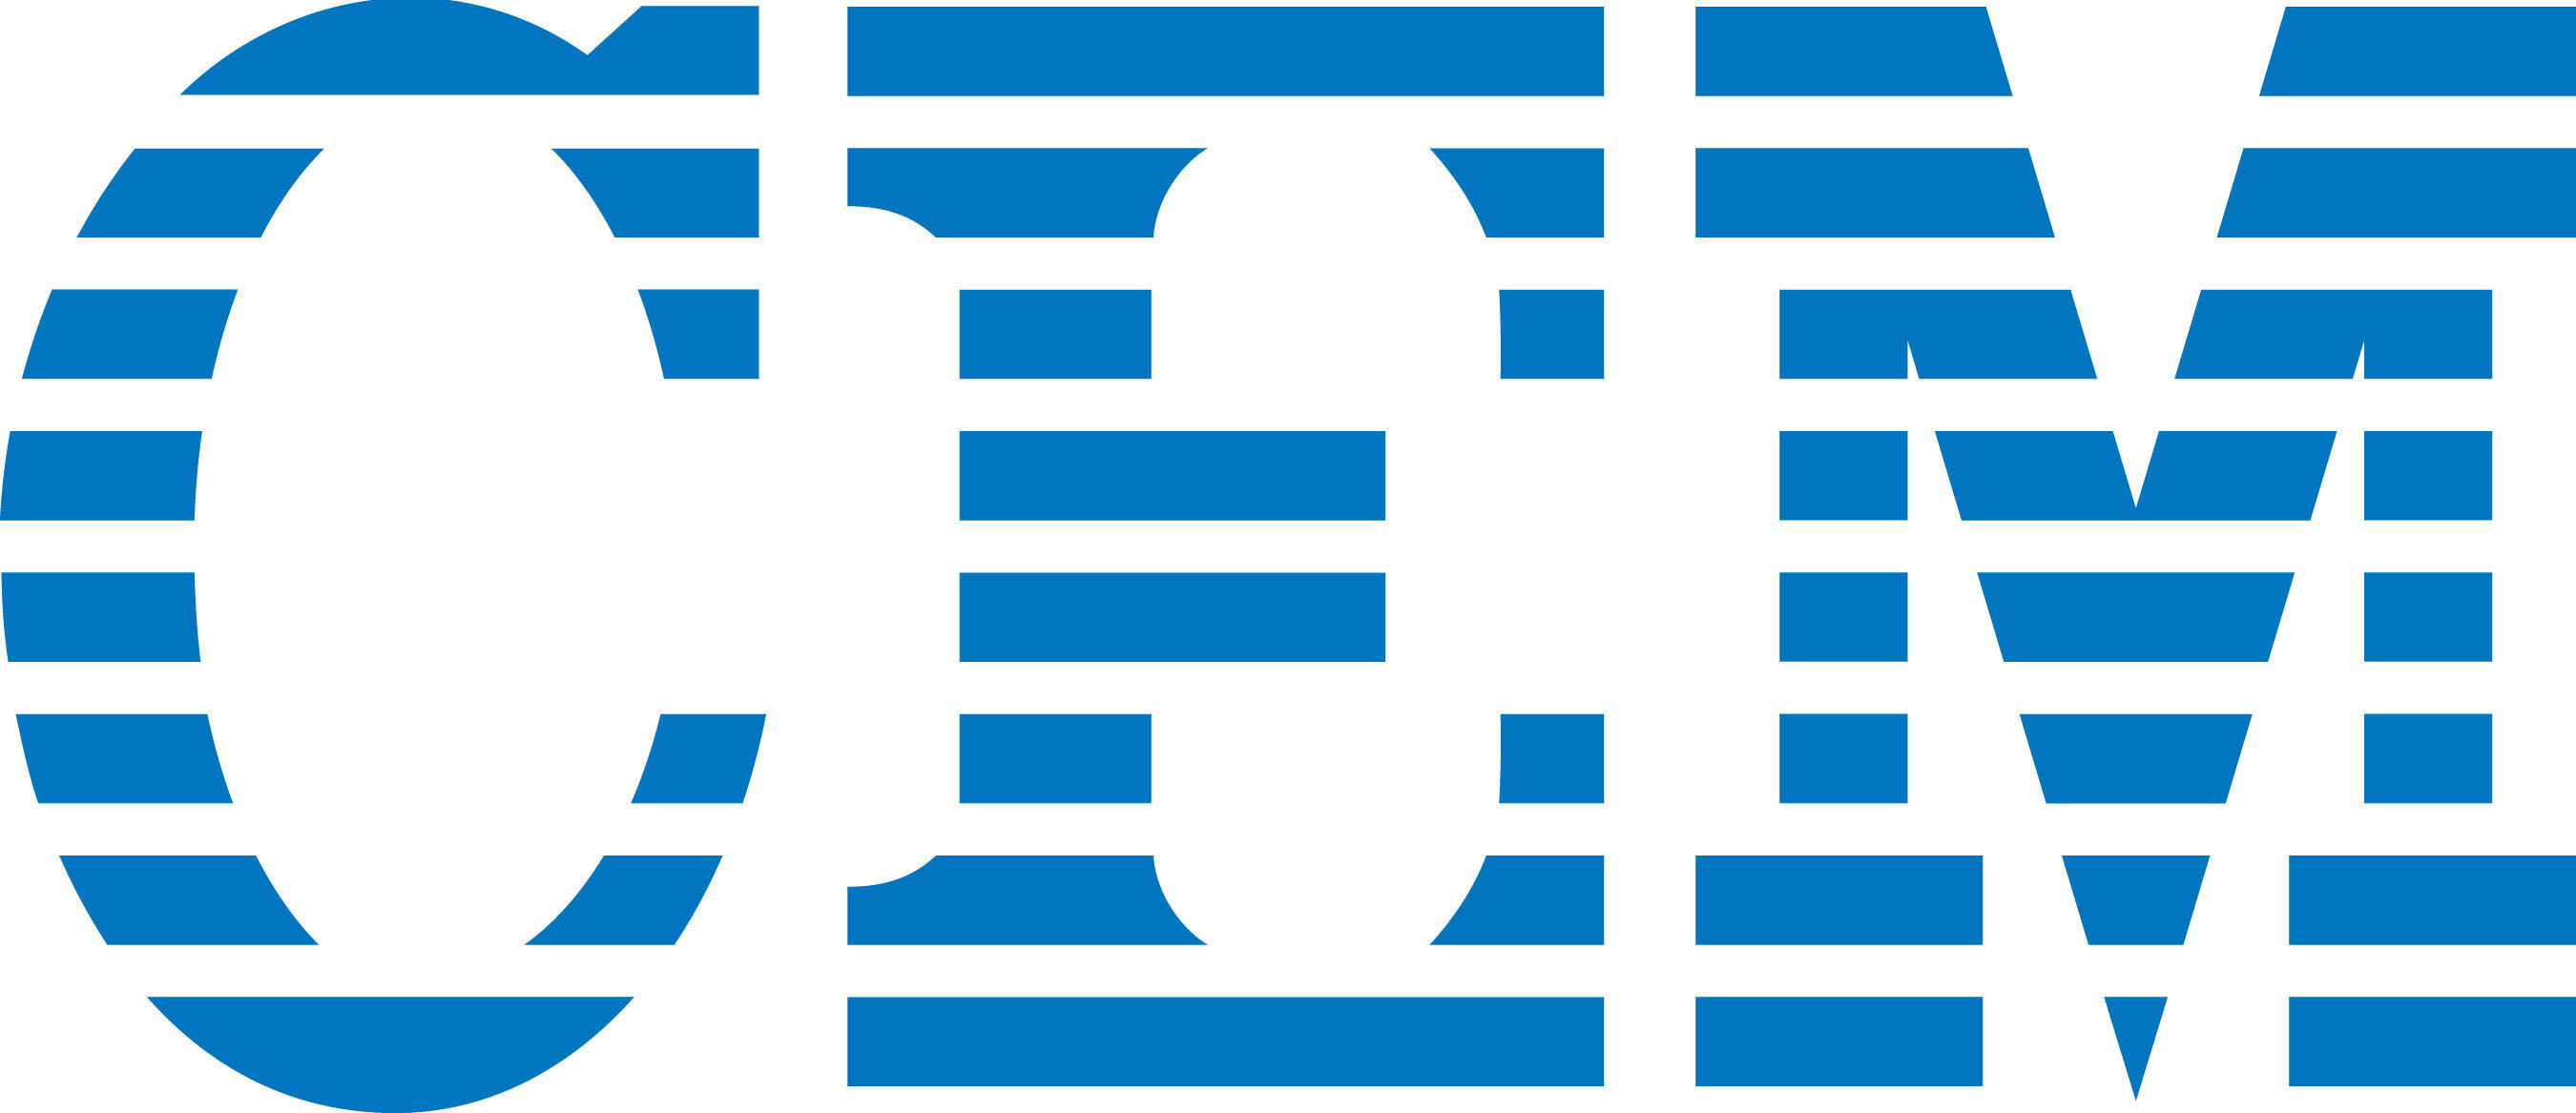 CEM Corporation logo.